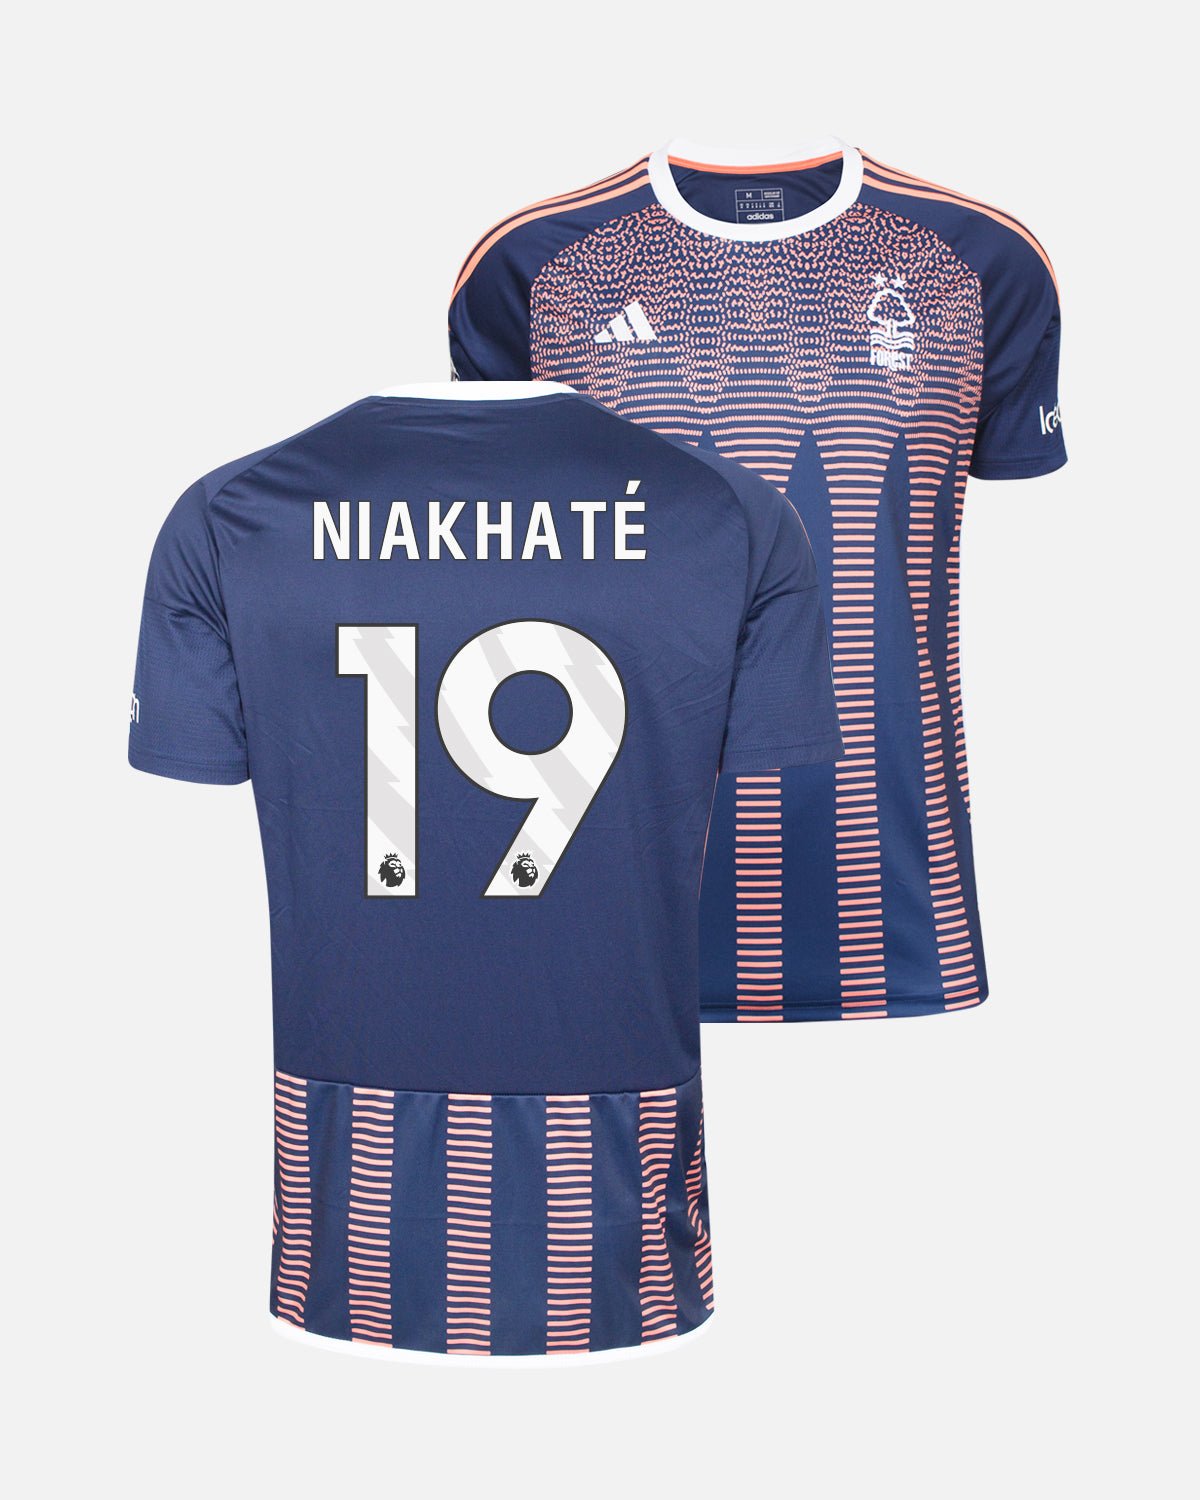 NFFC Junior Third Shirt 23-24 - Niakhaté 19 - Nottingham Forest FC